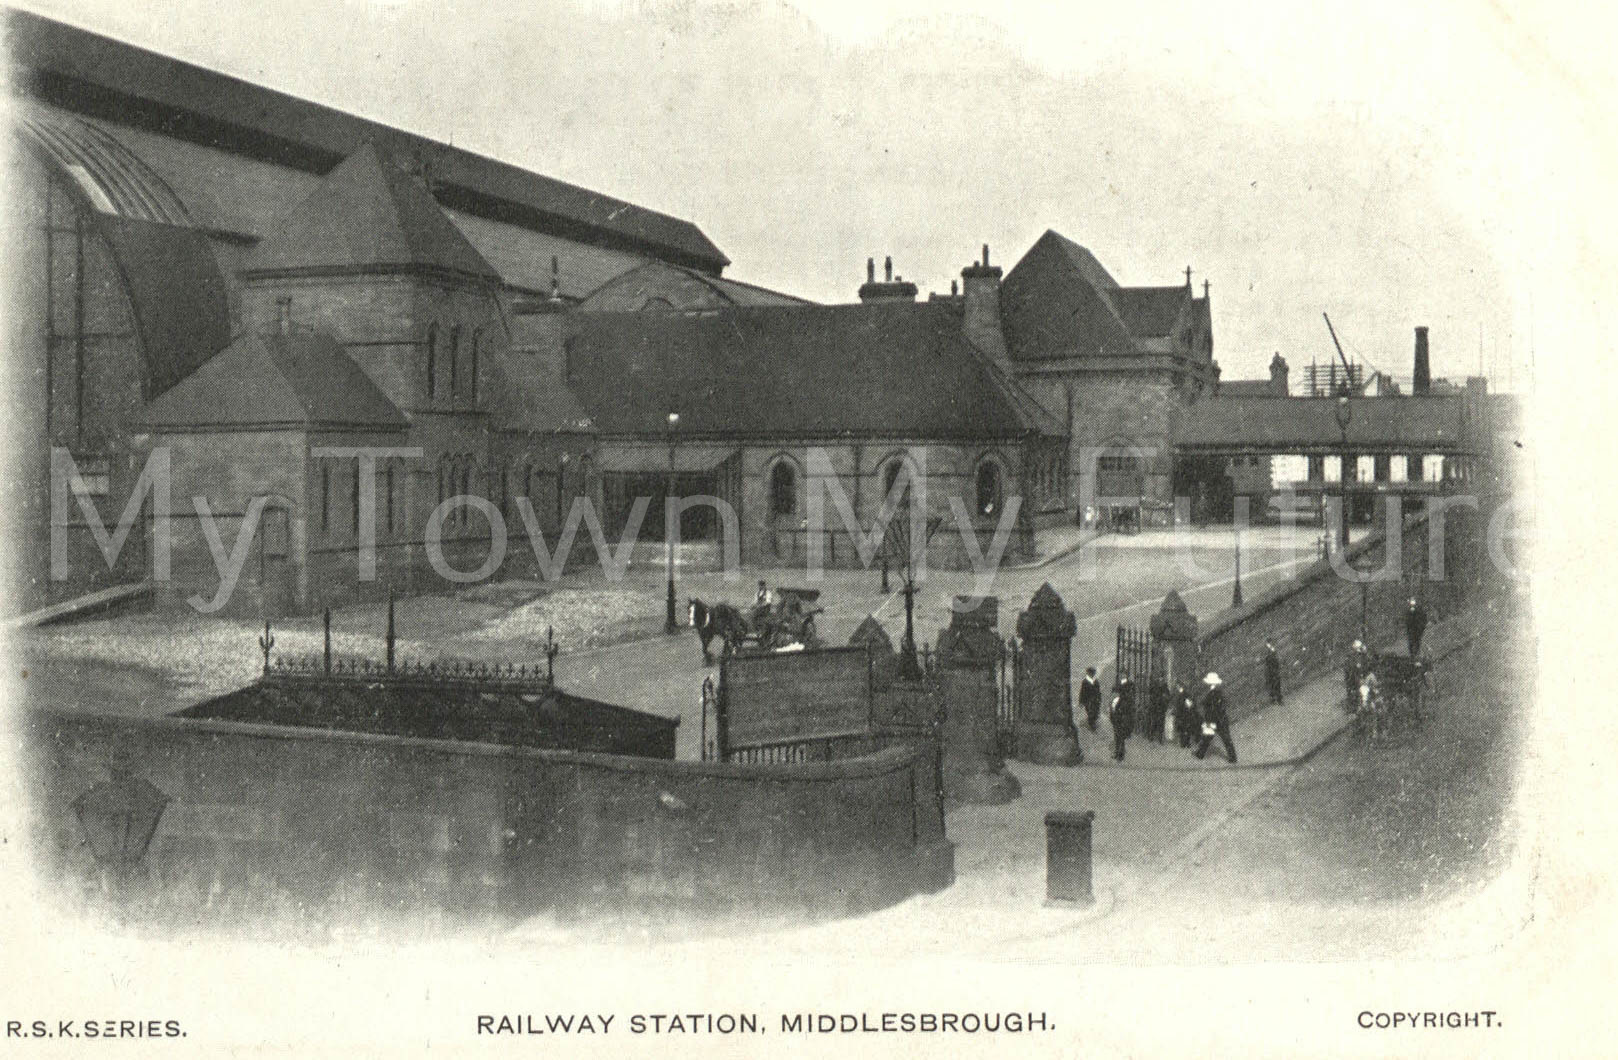 Middlesbrough Railway Station